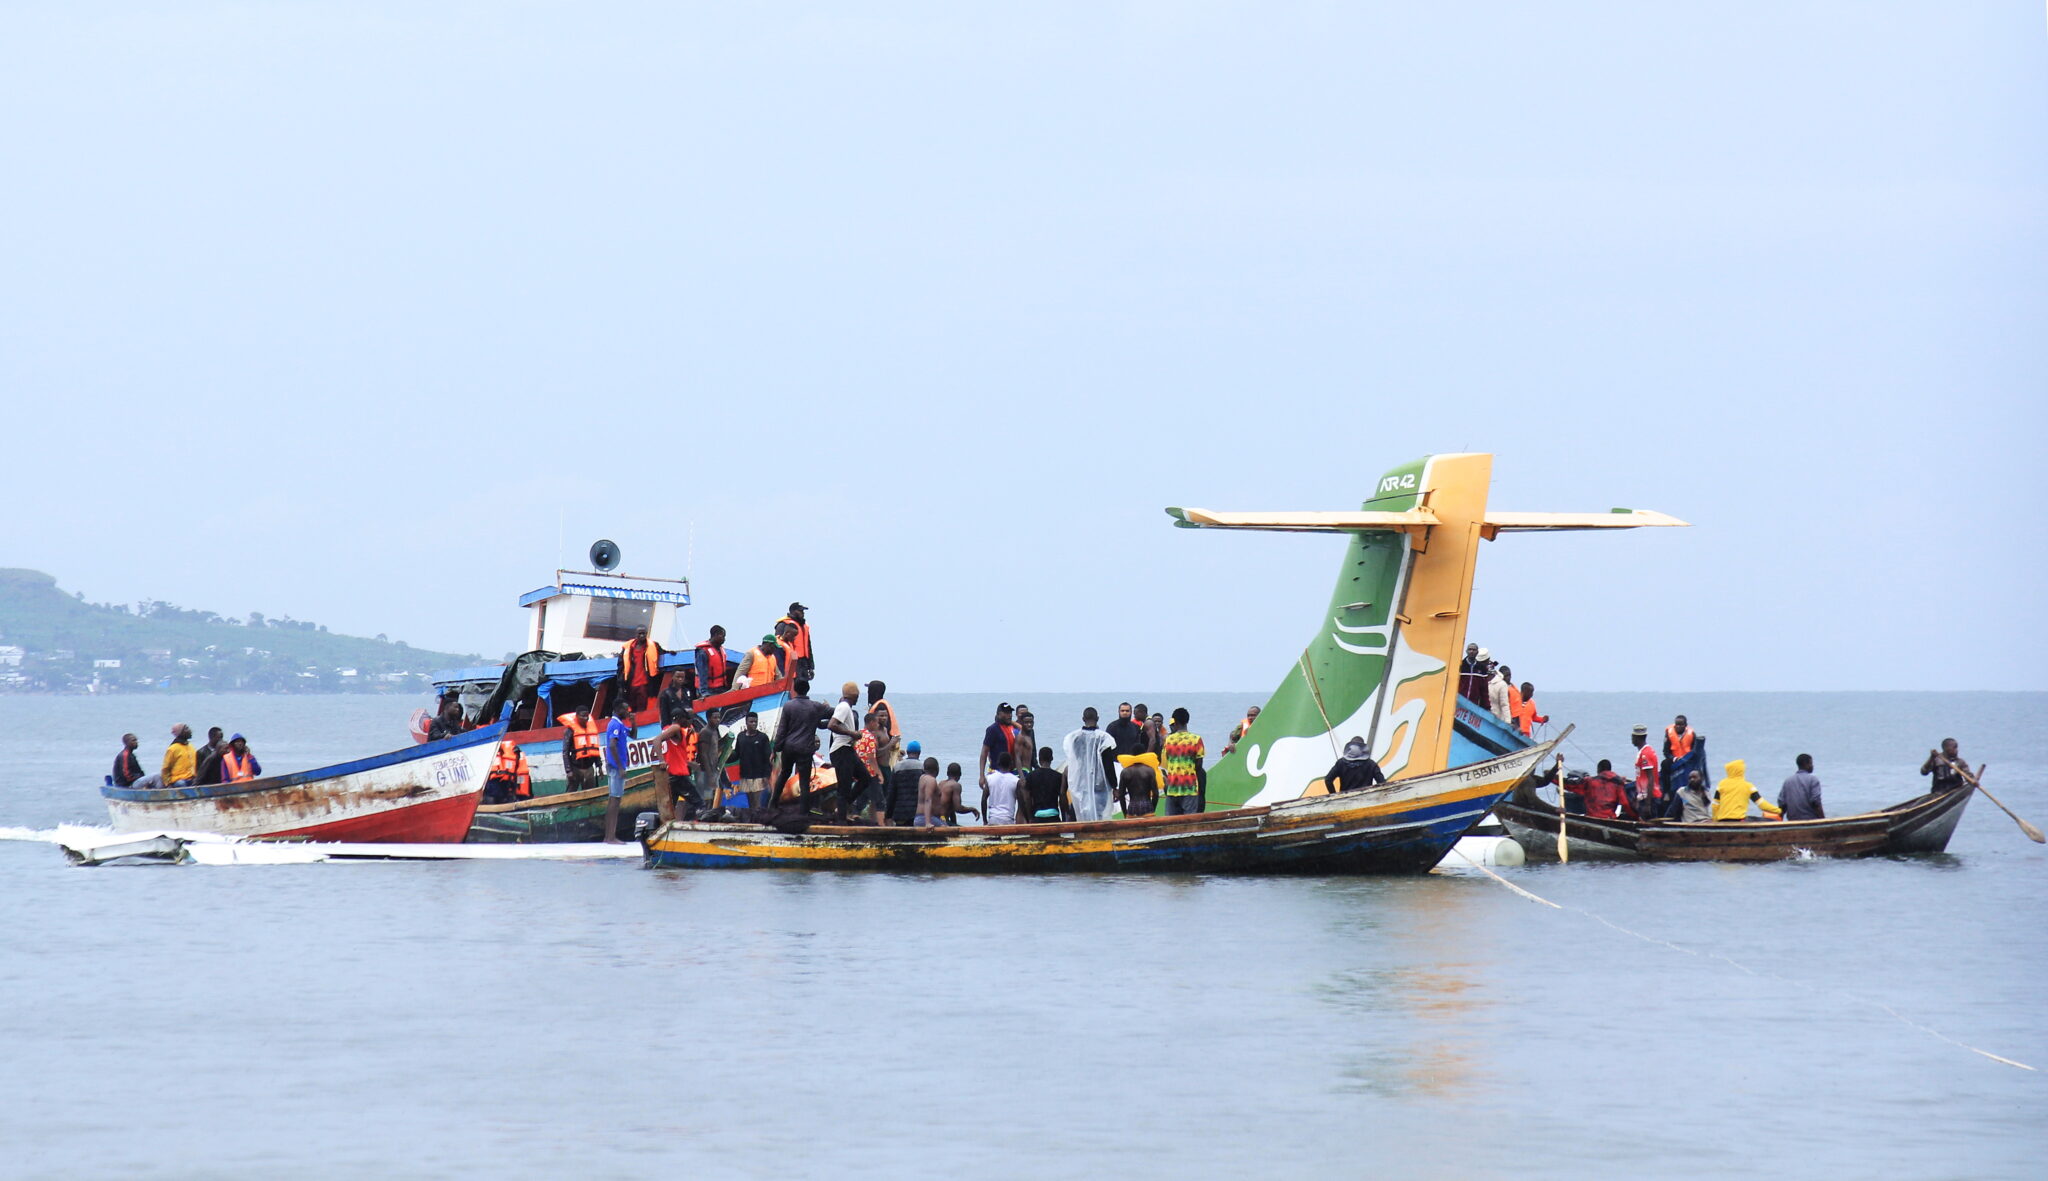 Самолет Precision Air после падения в озеро Виктория в Танзании. Фото EPA/Scanpix/Leta.